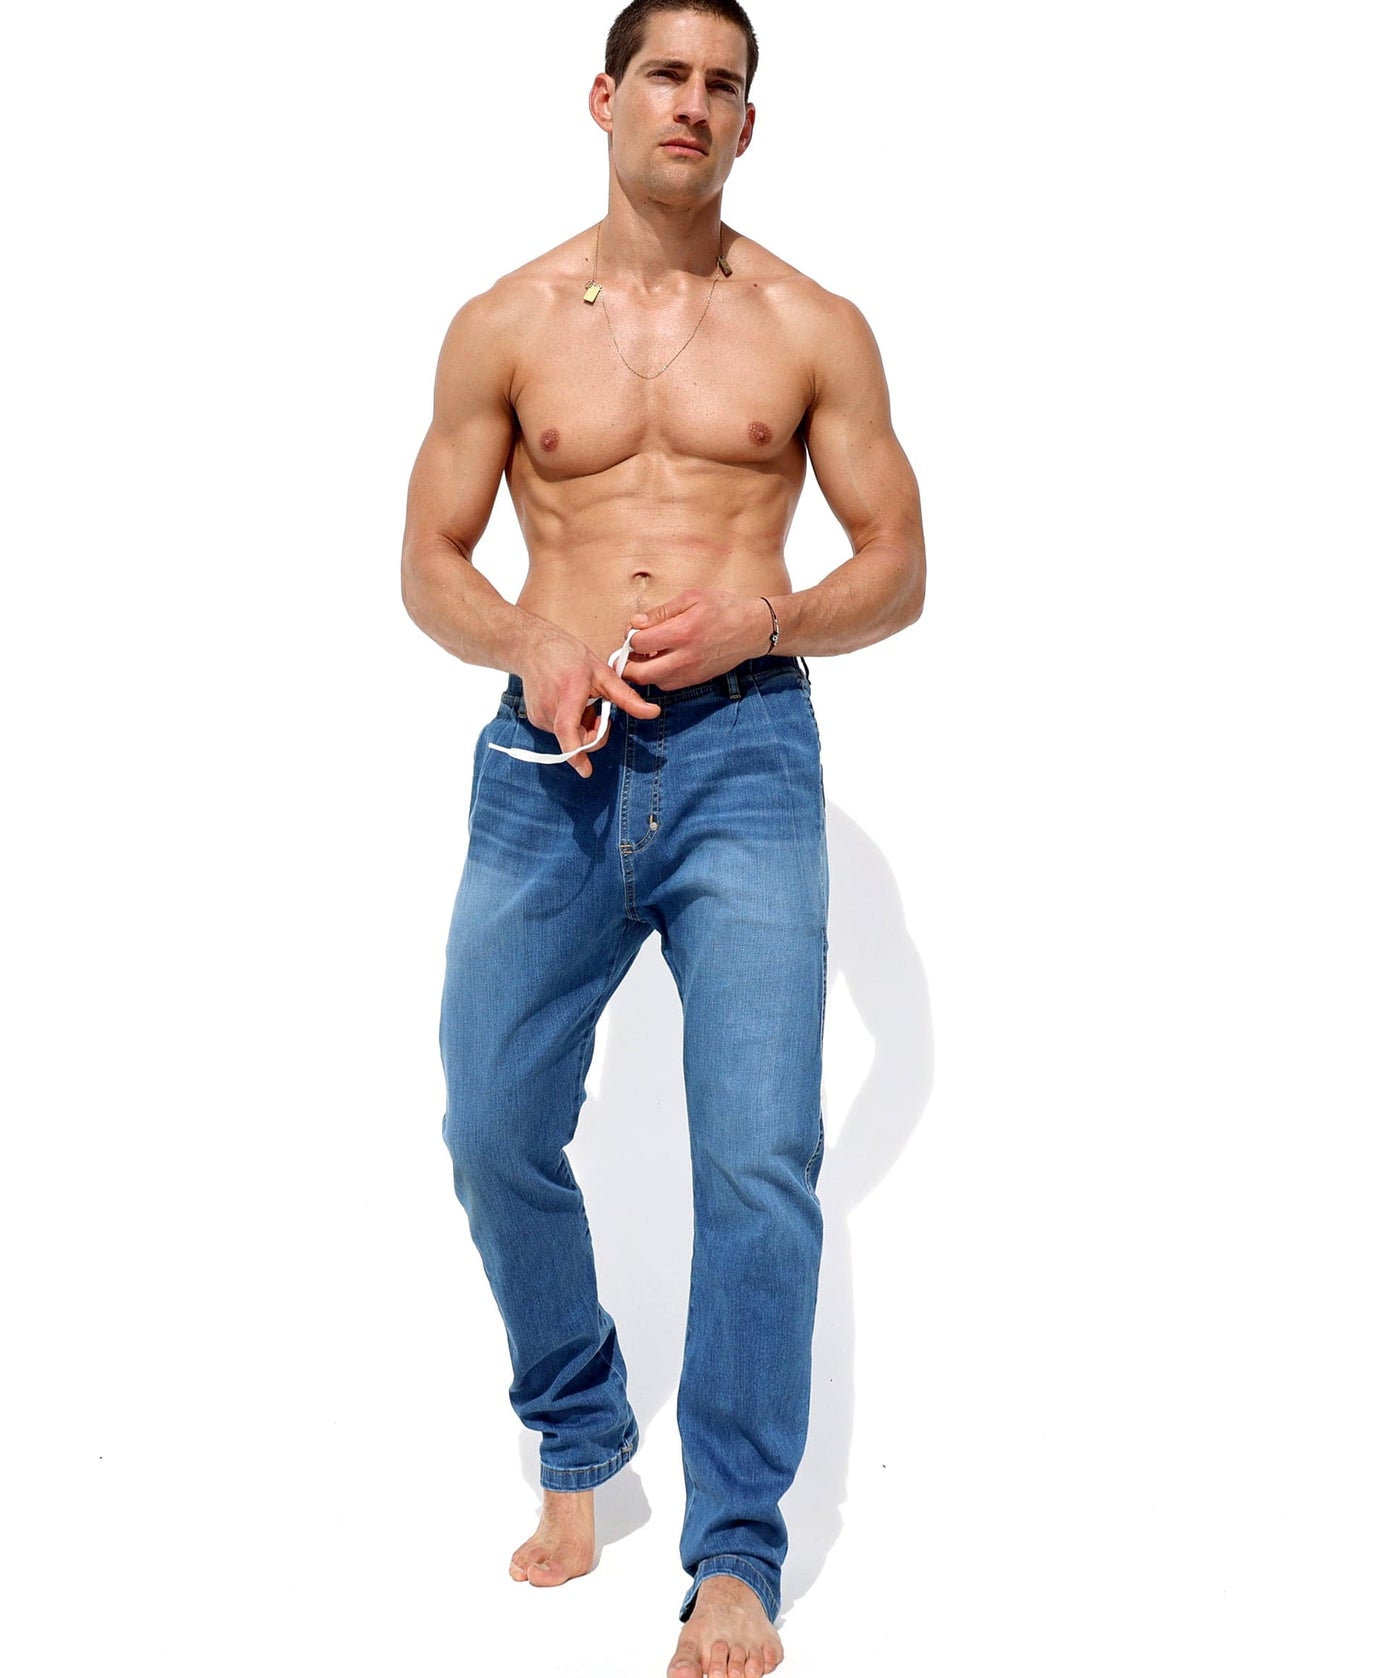 Rufskin - Australia - @coitusmagazine @webster by @pantelisworld - new on  coitus online. Wearing @rufskin thank you Coitus!  underwear-for-men.html